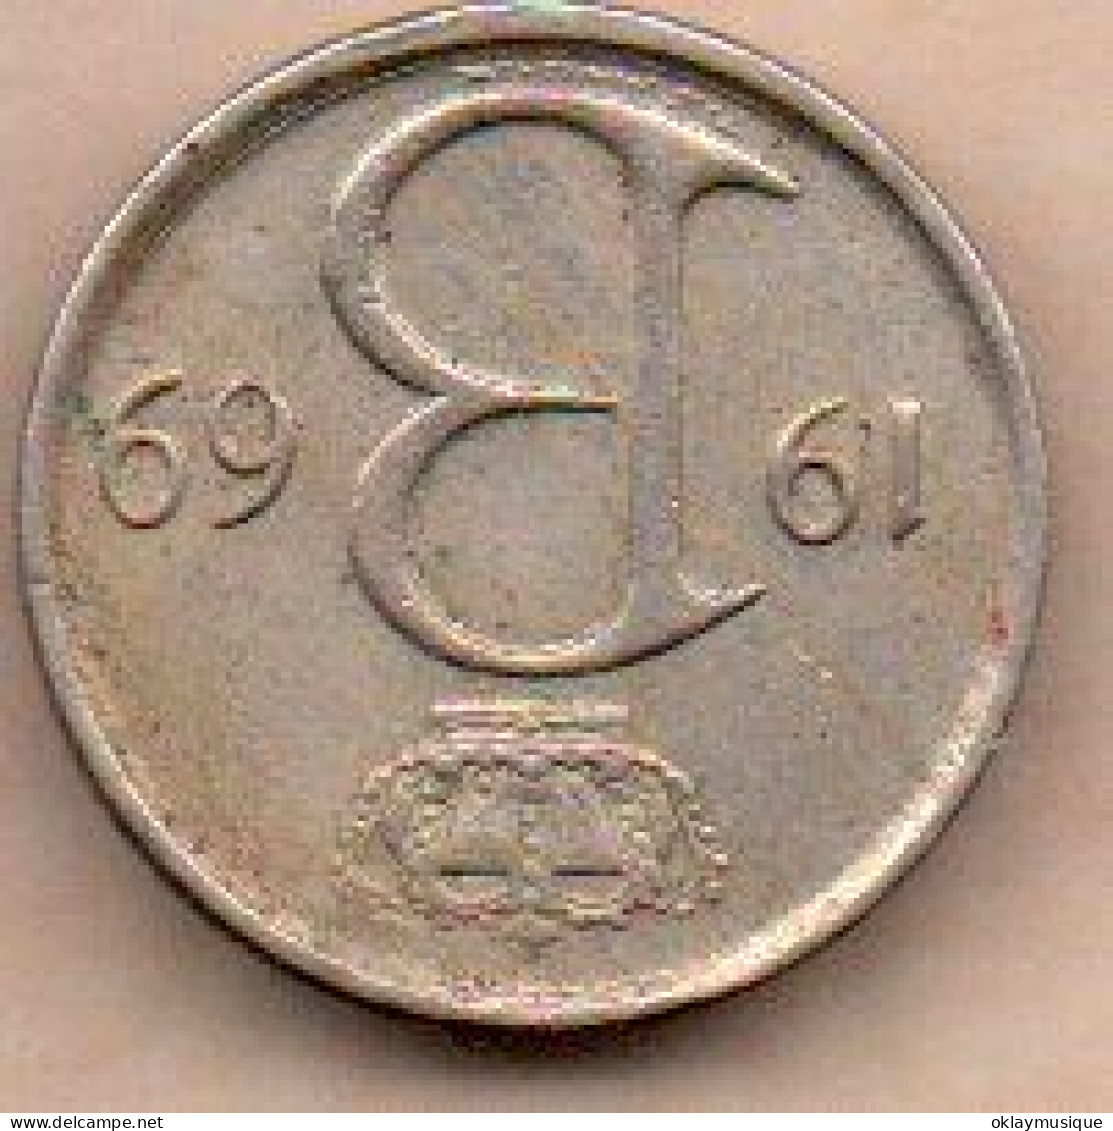 25 Centimes 1969 - 25 Cents